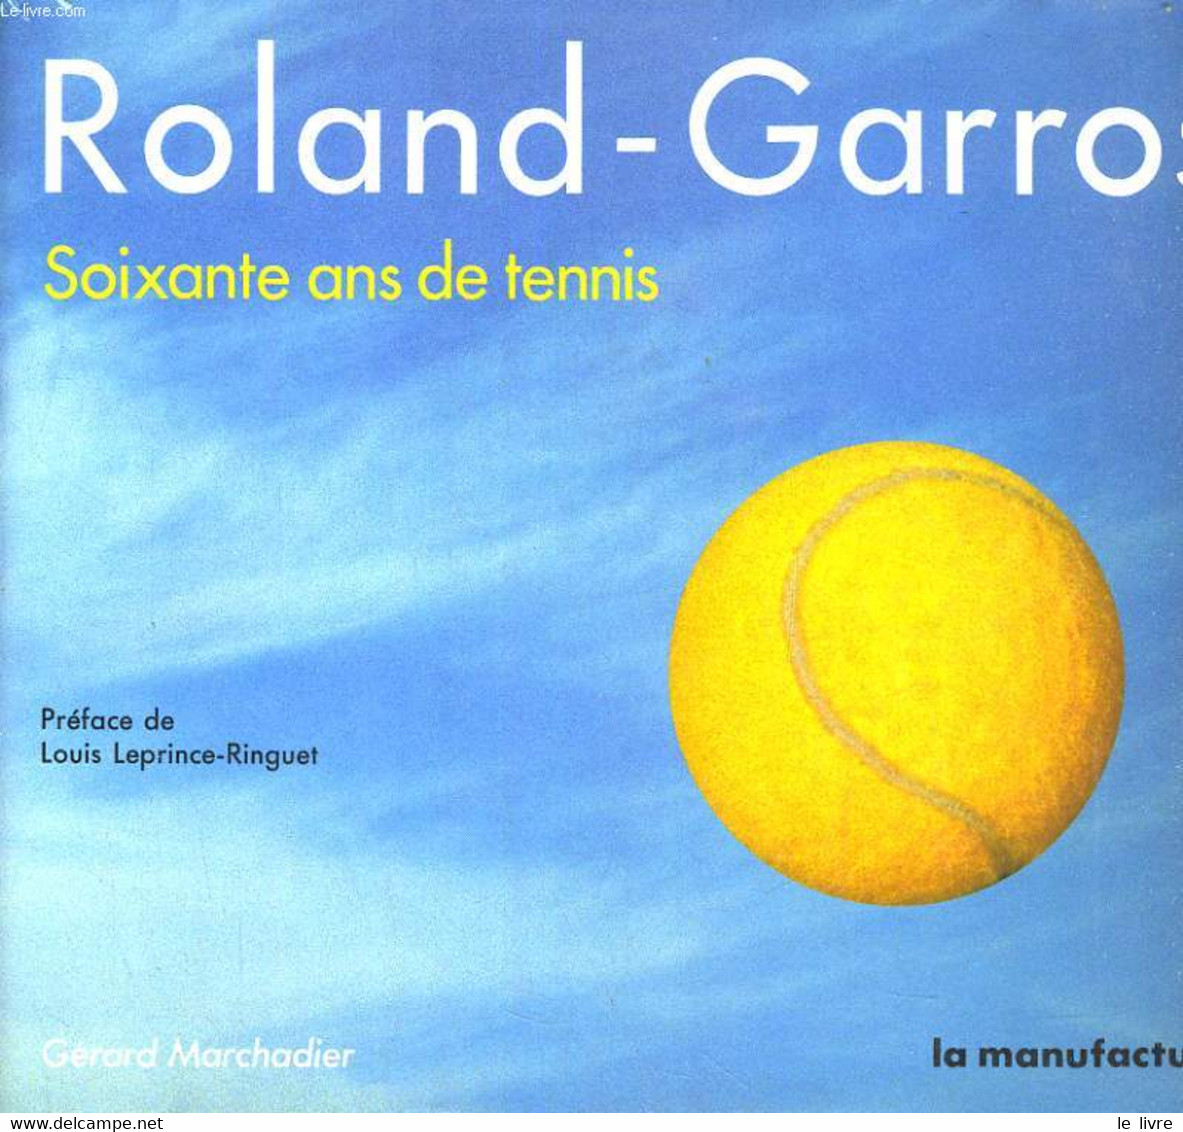 ROLAND-GARROS. SOIXANTE ANS DE TENNIS - GERARD MARCHADIER - 1987 - Livres